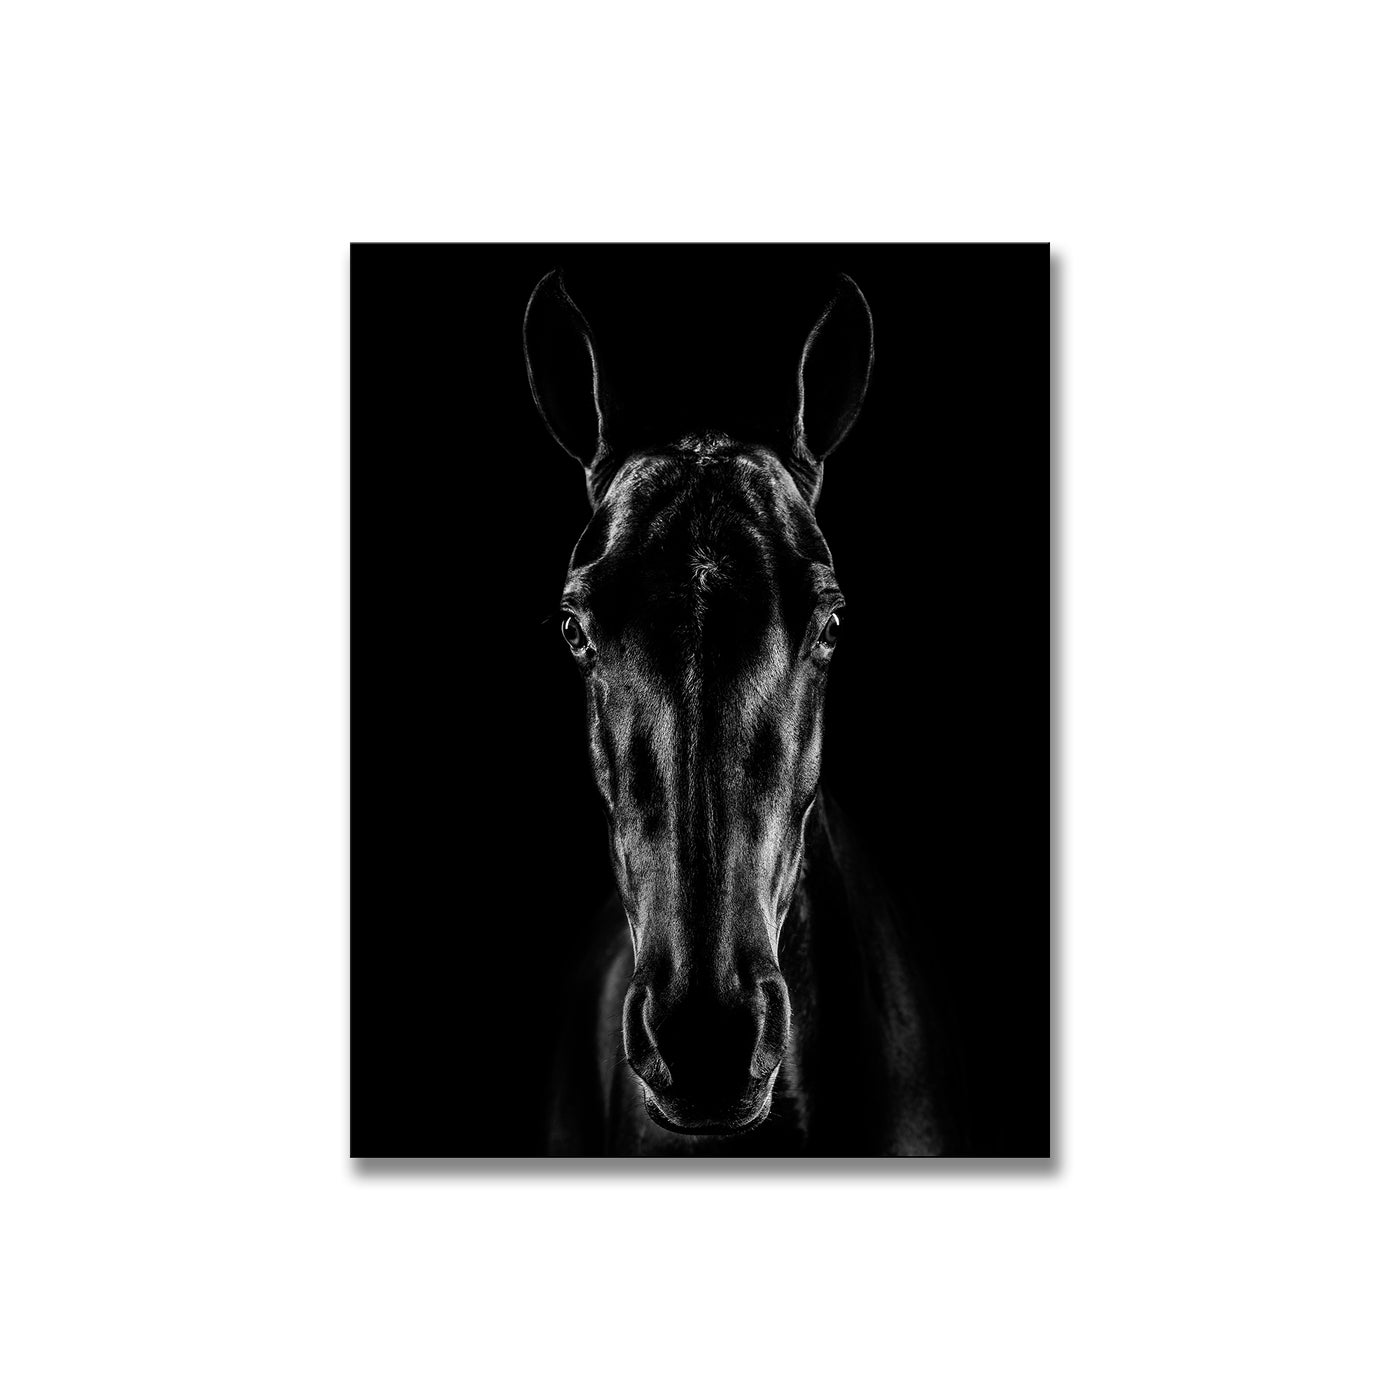 The Horse in Noir 15